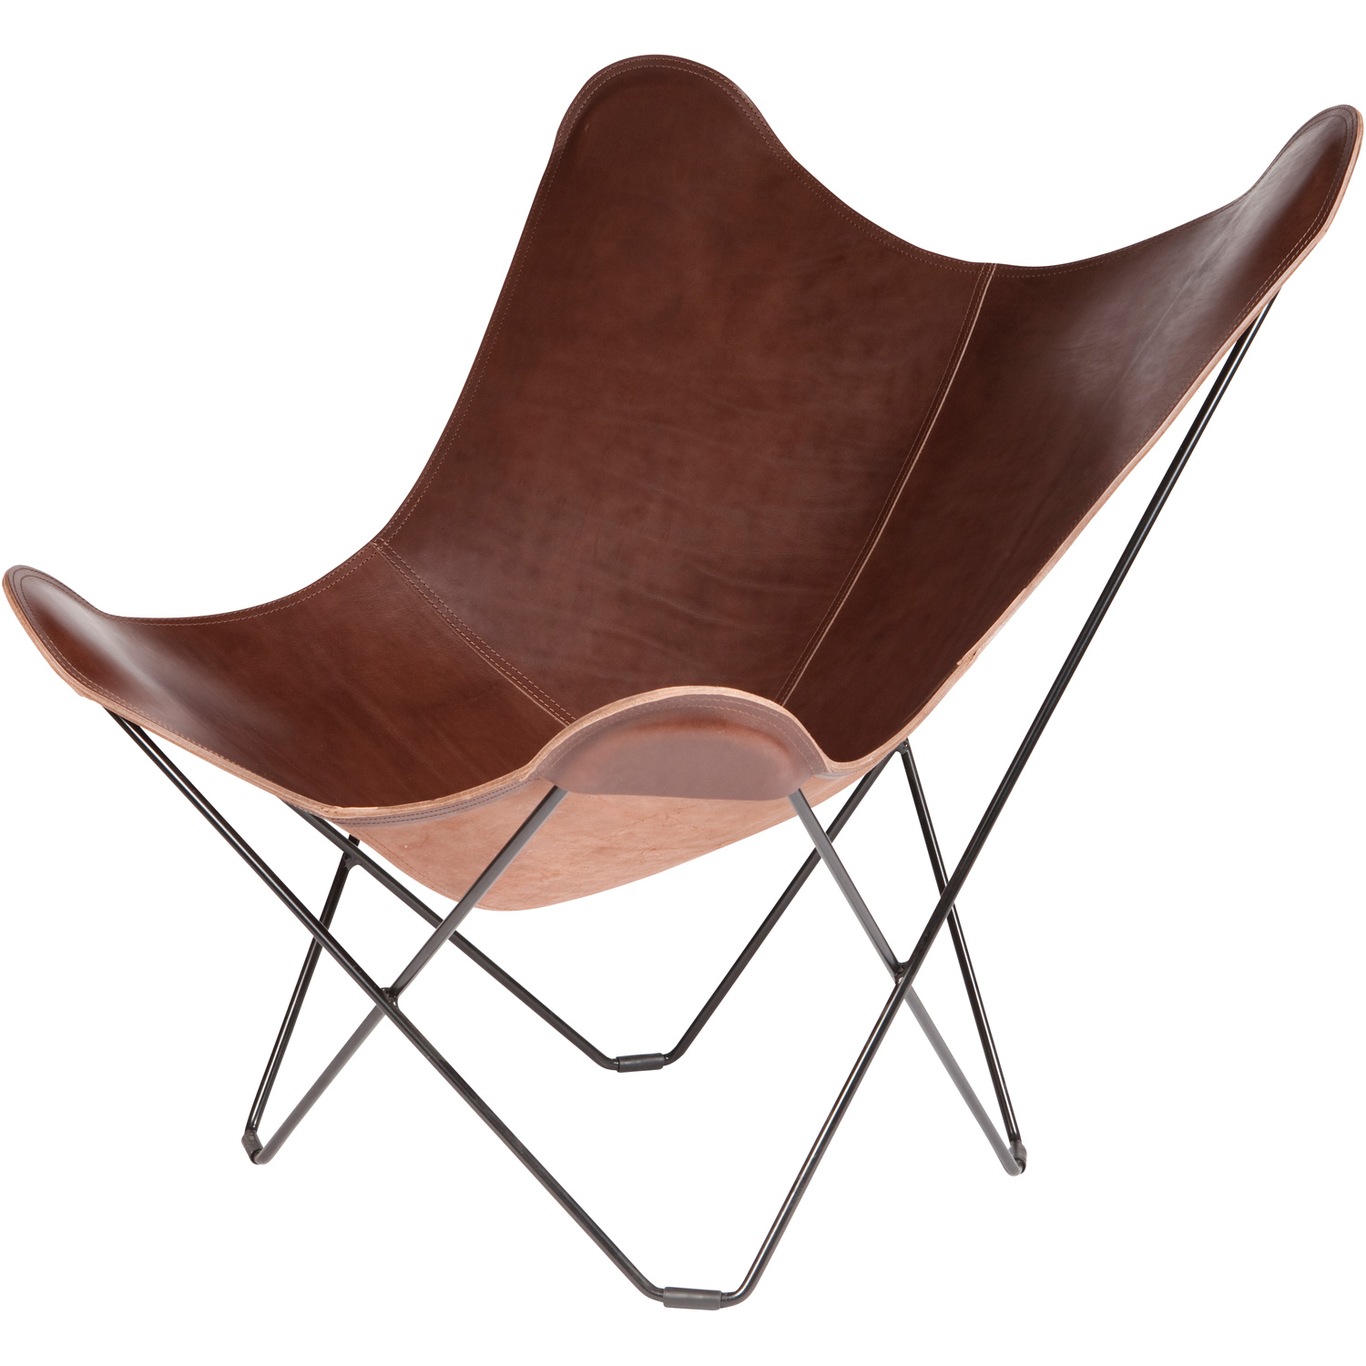 Pampa Mariposa BF Chair, Chocolate/Black